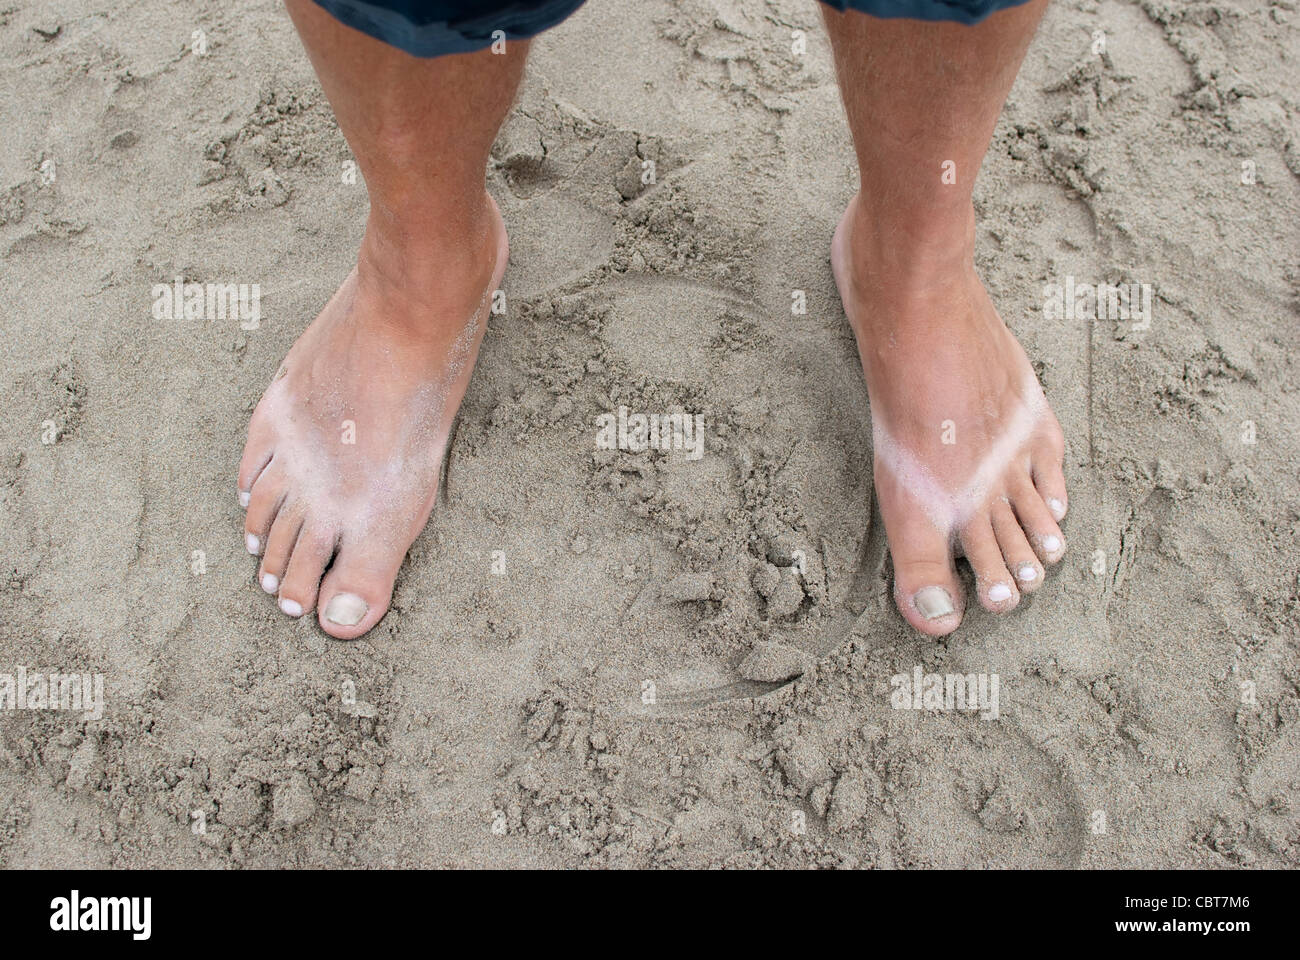 Tanned feet on a beach Stock Photo - Alamy